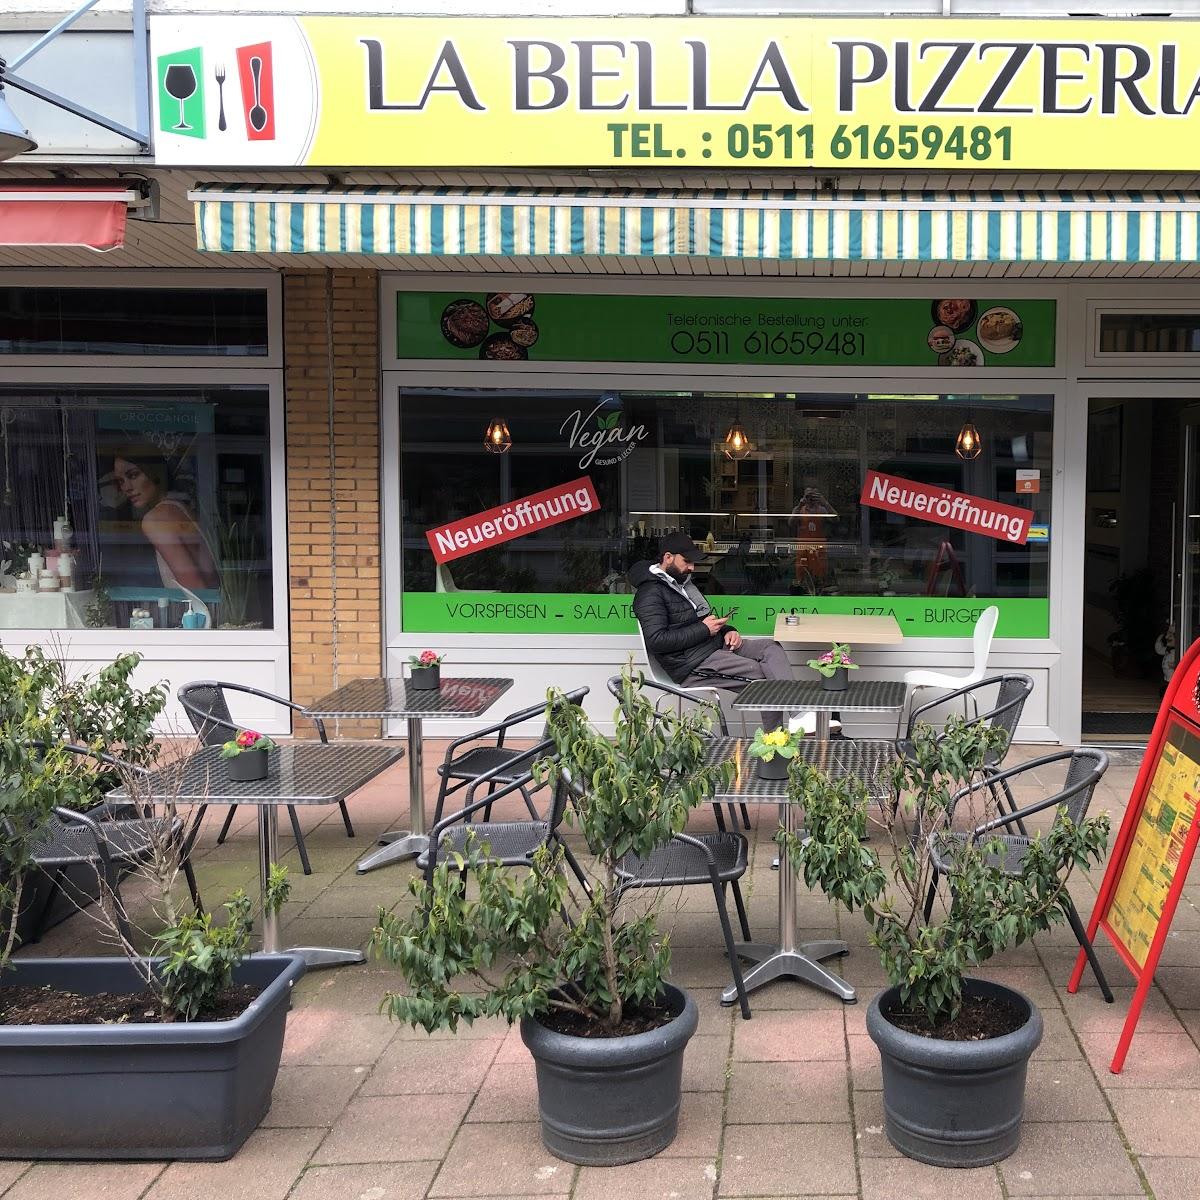 Restaurant "La Bella Pizzeria" in Isernhagen